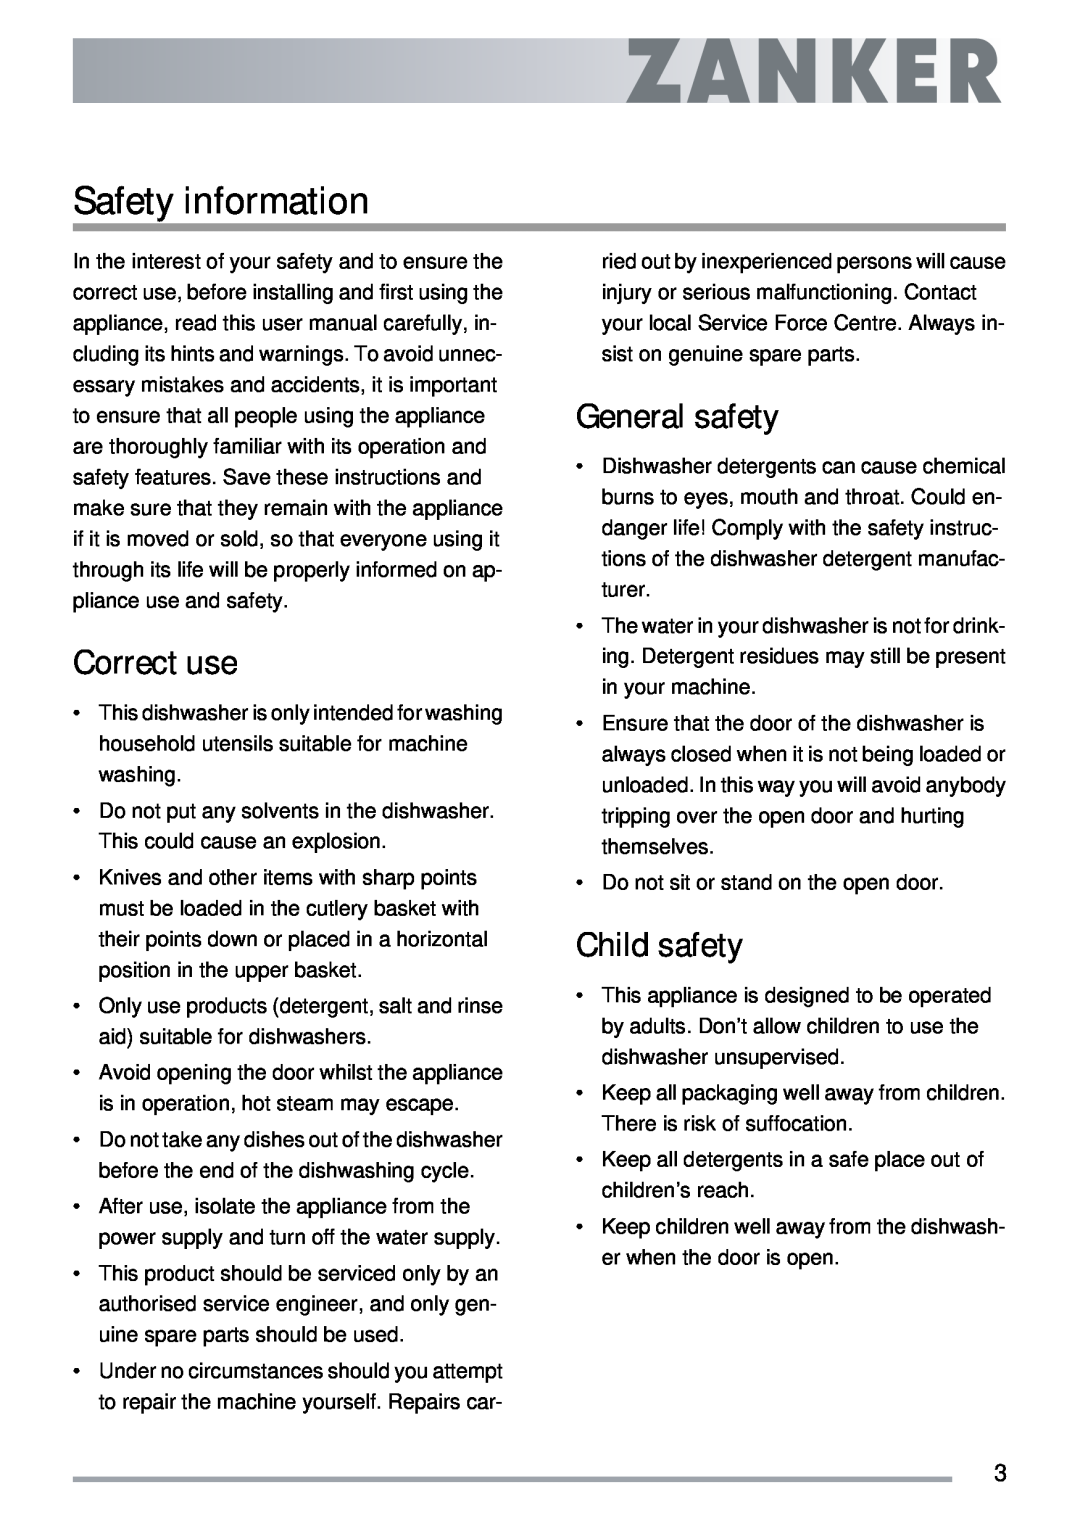 Electrolux ZKI1410 user manual Safety information, Correct use, General safety, Child safety 